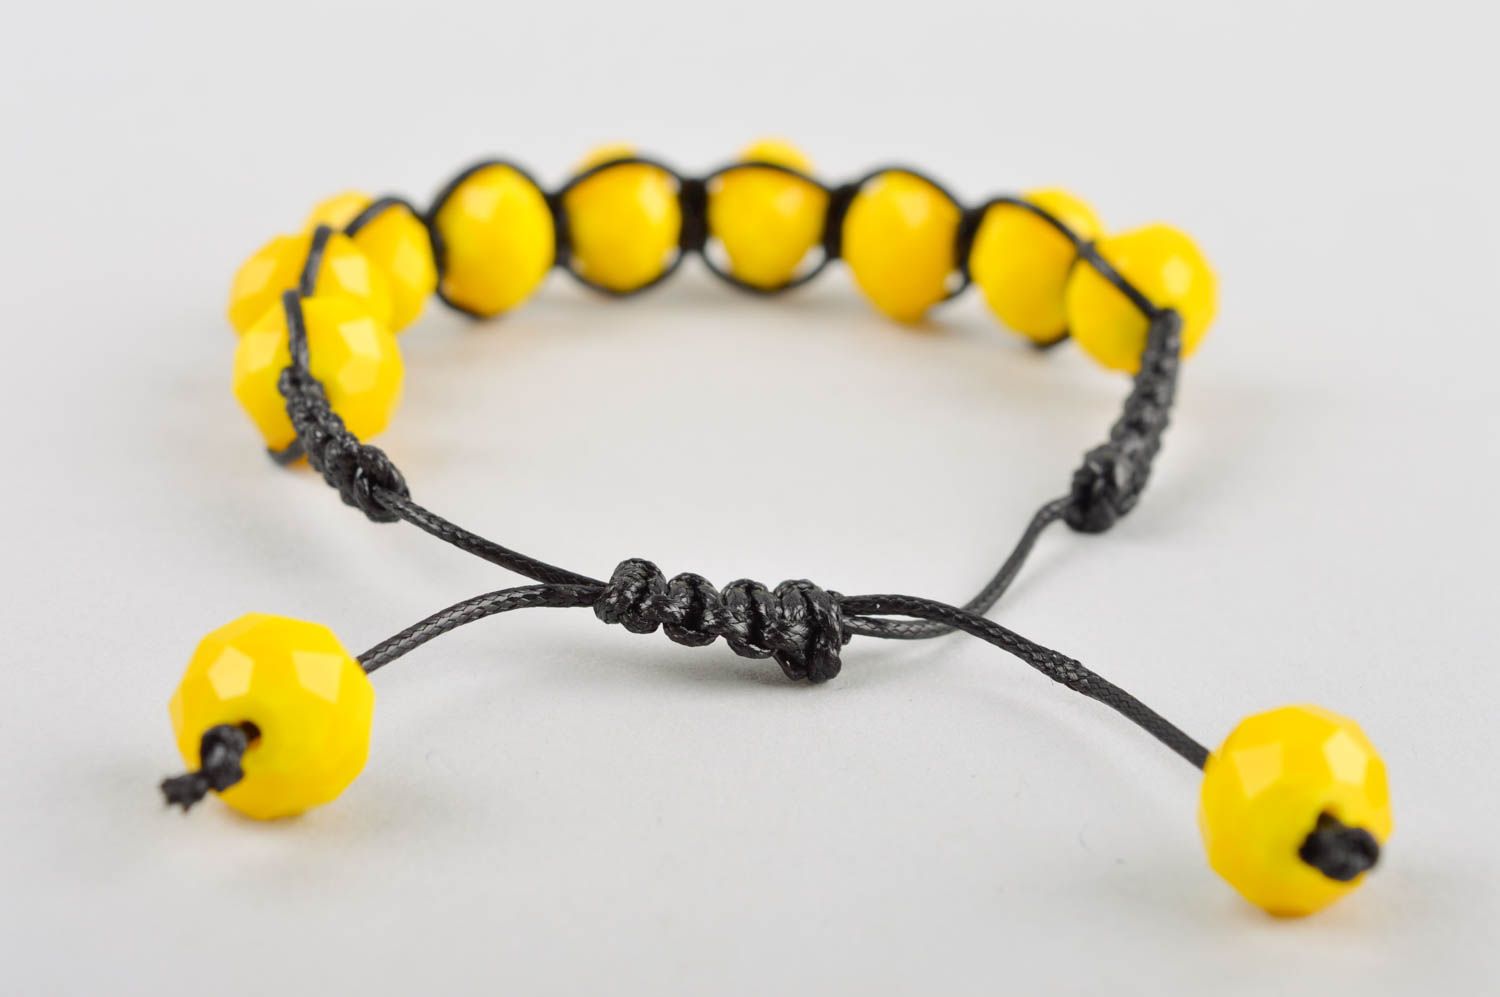 Unusual handmade woven cord bracelet bead bracelet designs gifts for her photo 2